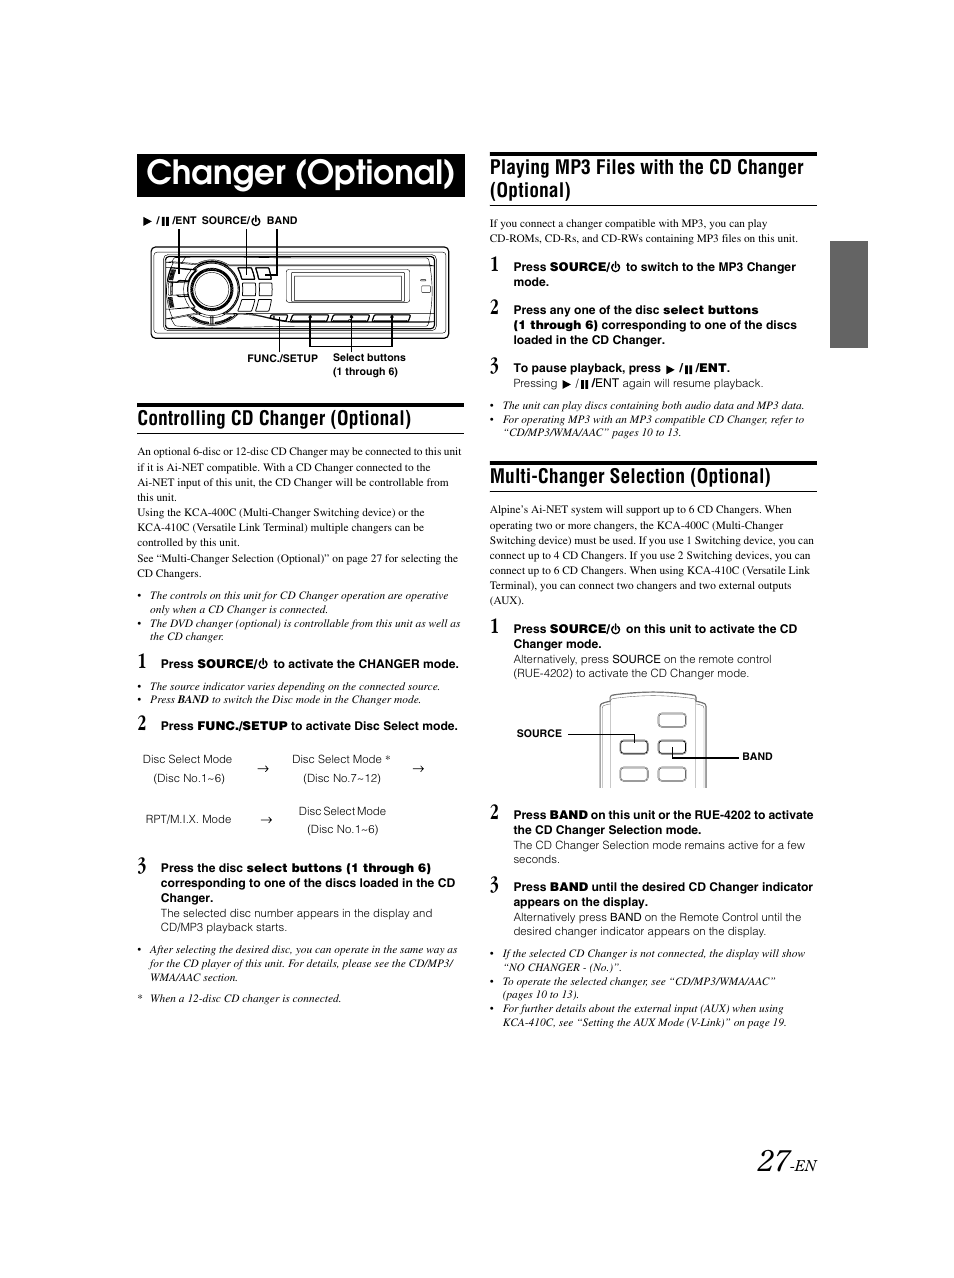 Changer control, Changer (optional), Controlling cd changer (optional